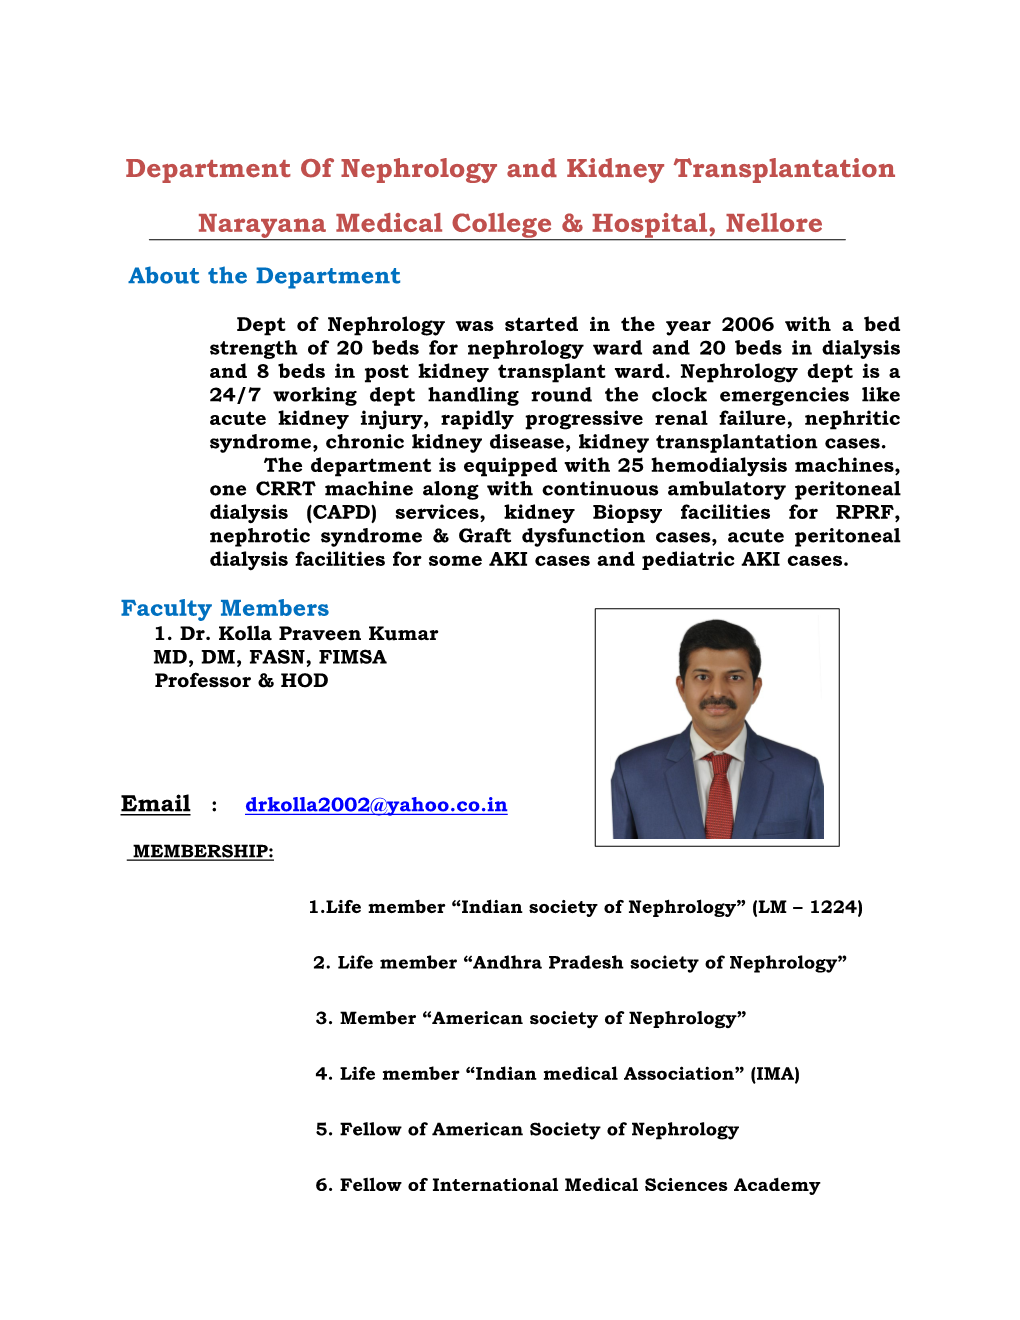 Department of Nephrology and Kidney Transplantation Narayana